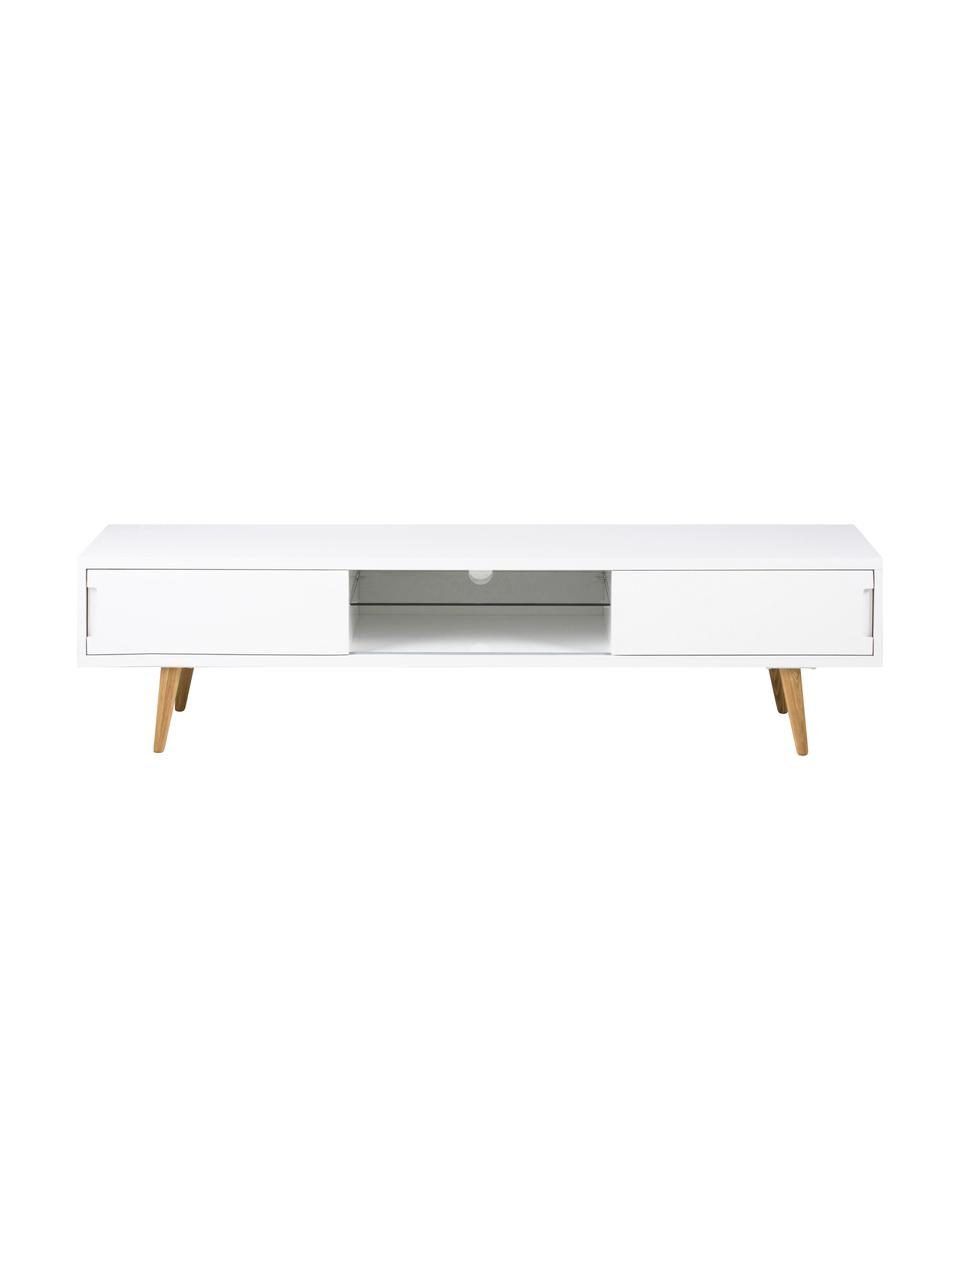 Tv-meubel Cassie in wit hoogglans, Poten: massief en geolied essenh, Plank: glas, Wit, bruin, 180 x 46 cm